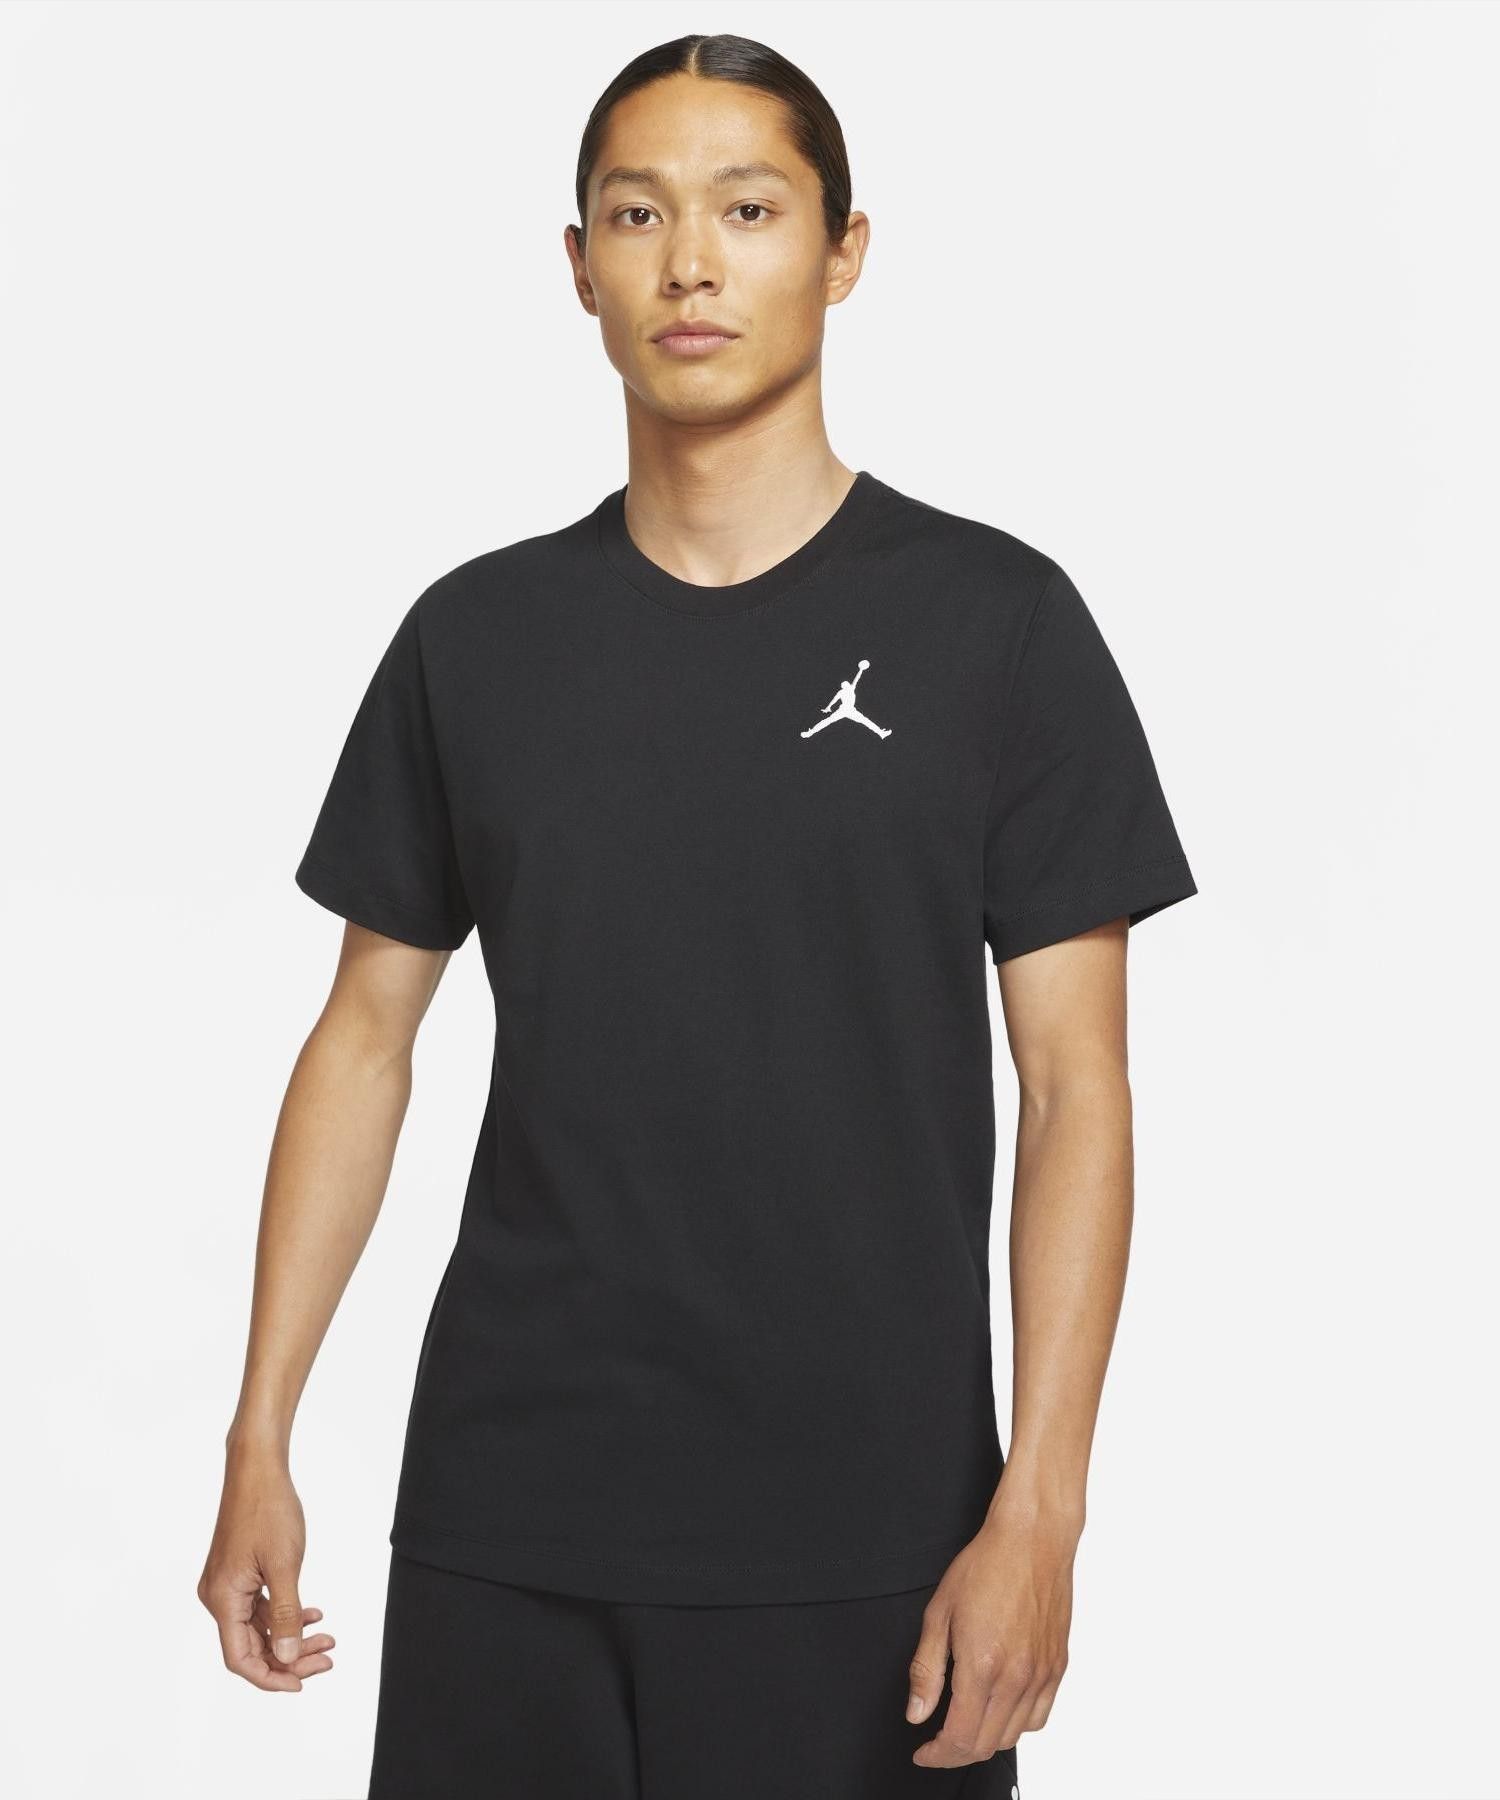 JORDAN BRANDジョーダン ジャンプマン ショートスリーブ Tシャツ Nike Jumpman Jordan T-Shirt Men's 激安 Short-Sleeve 大人気定番商品